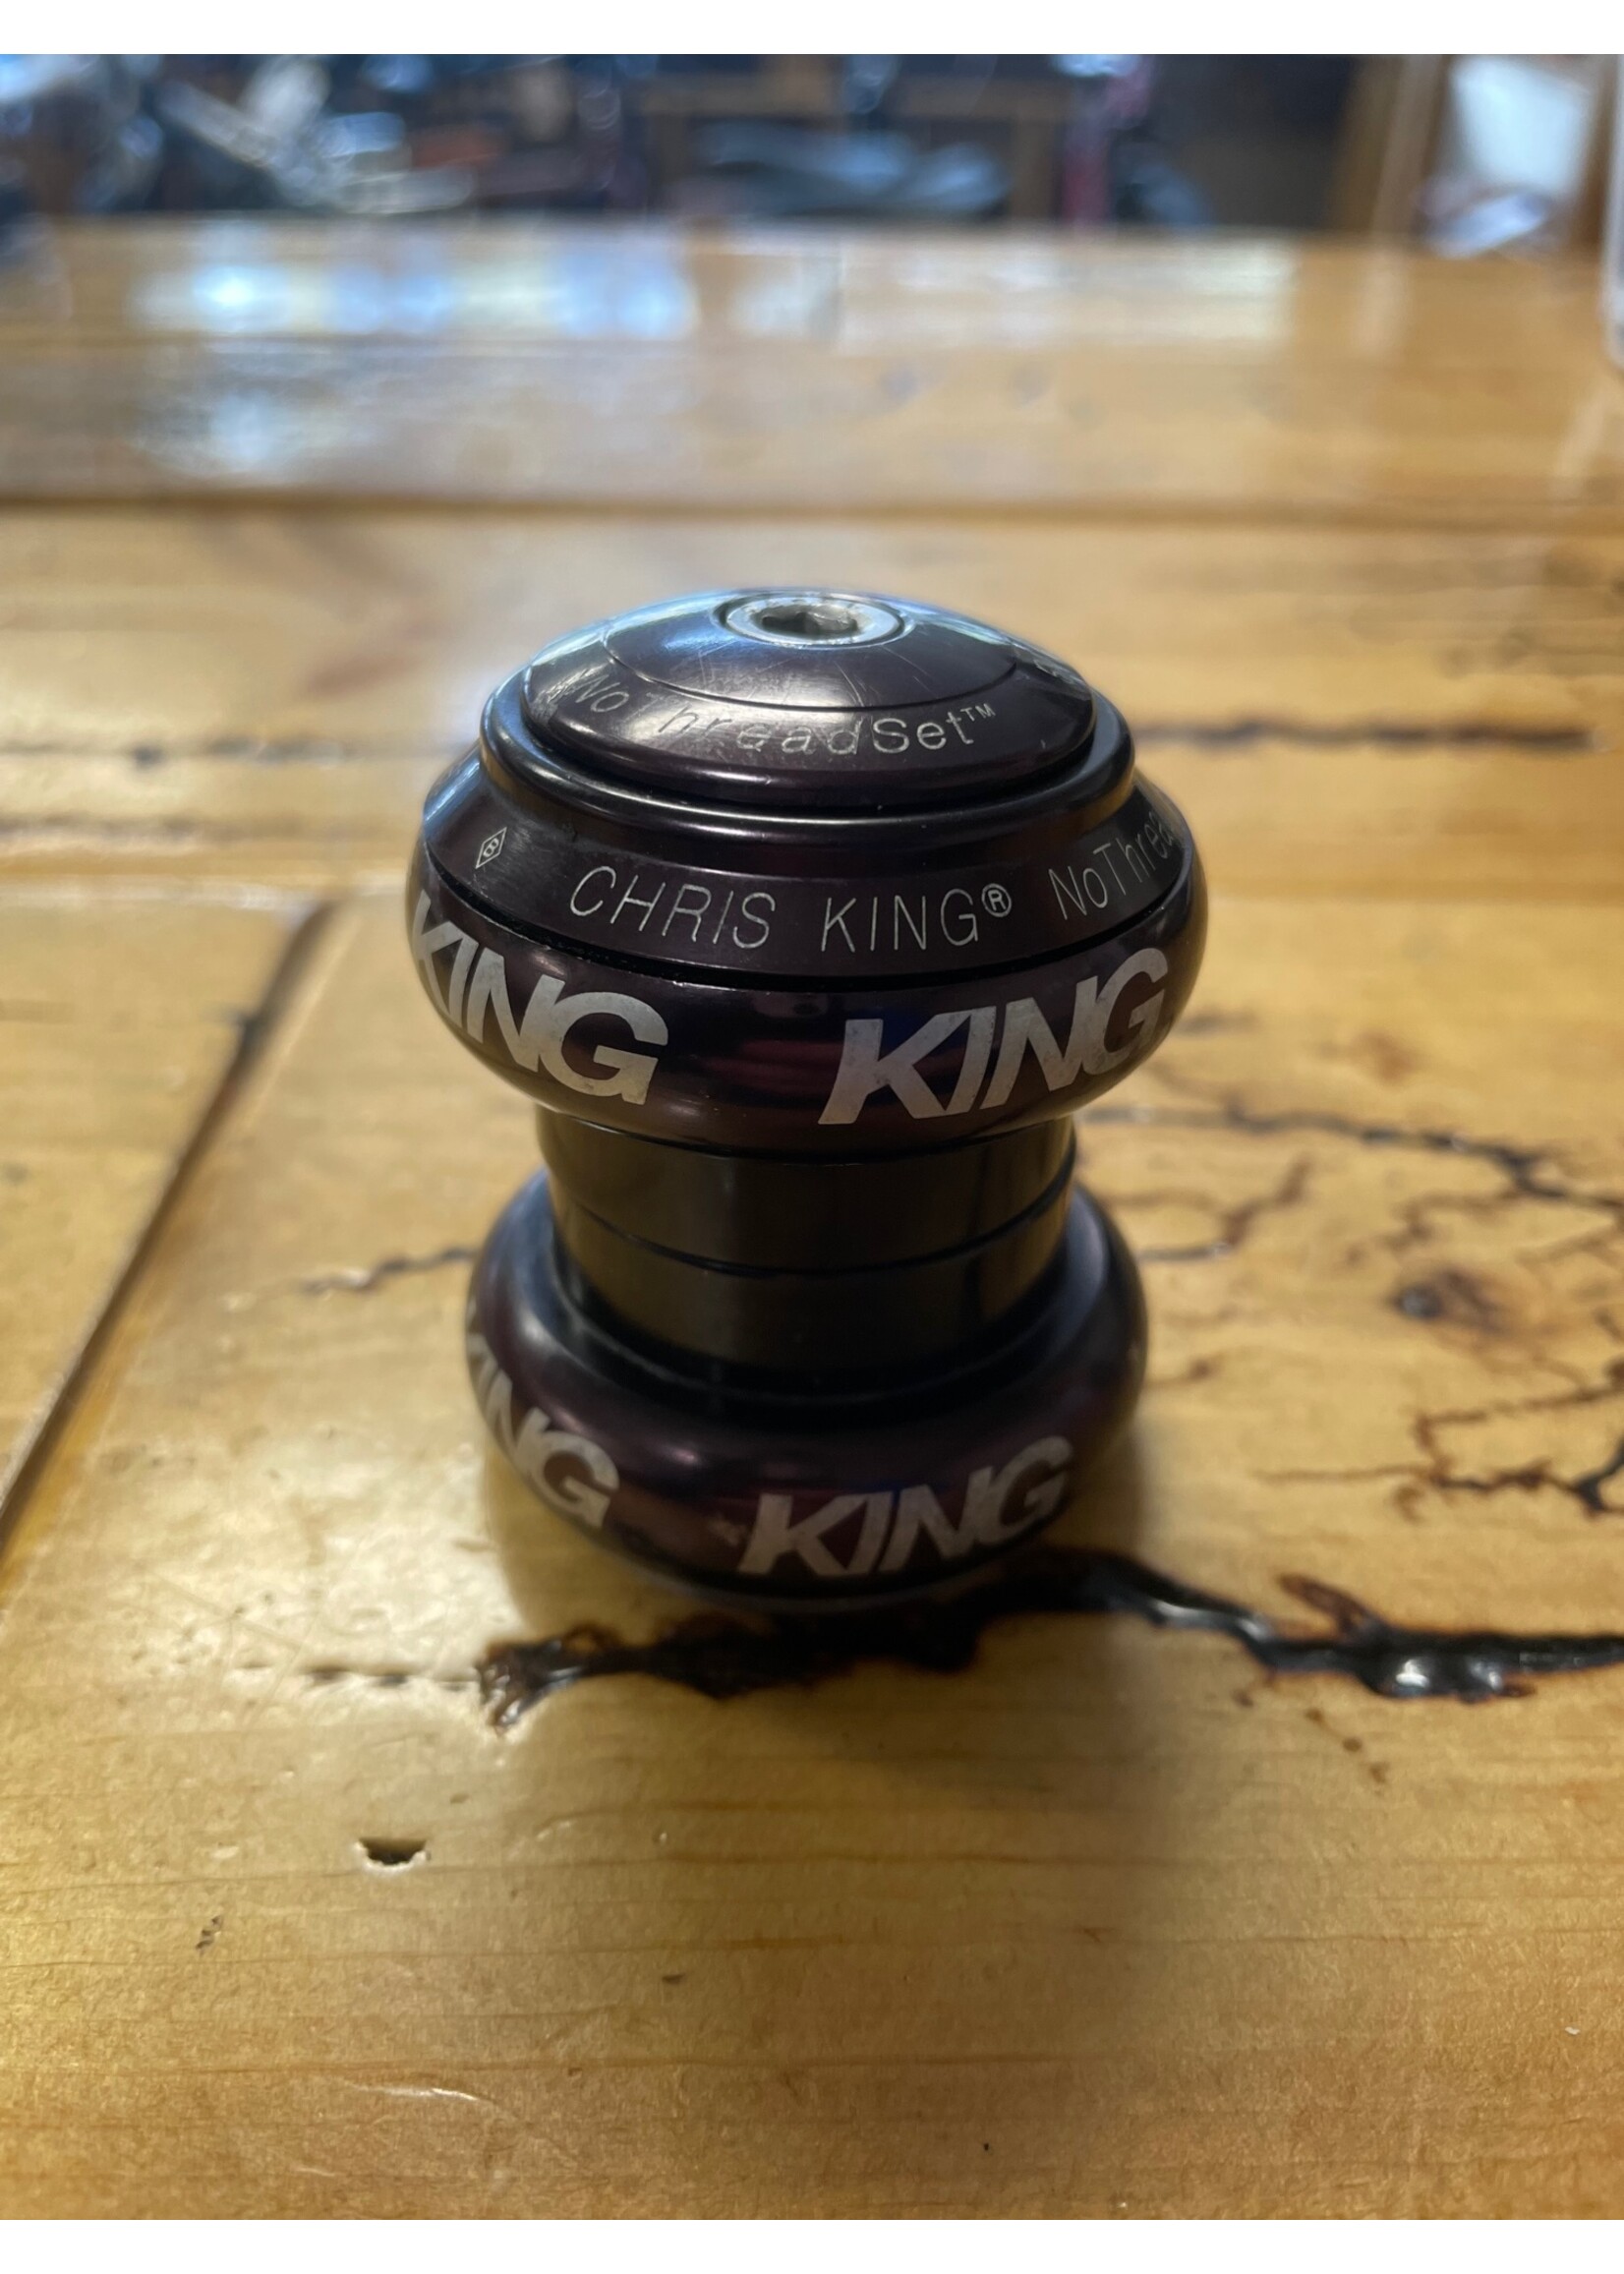 Chris King 1 1/8 Inch Nothreadset Threadless Black Headset